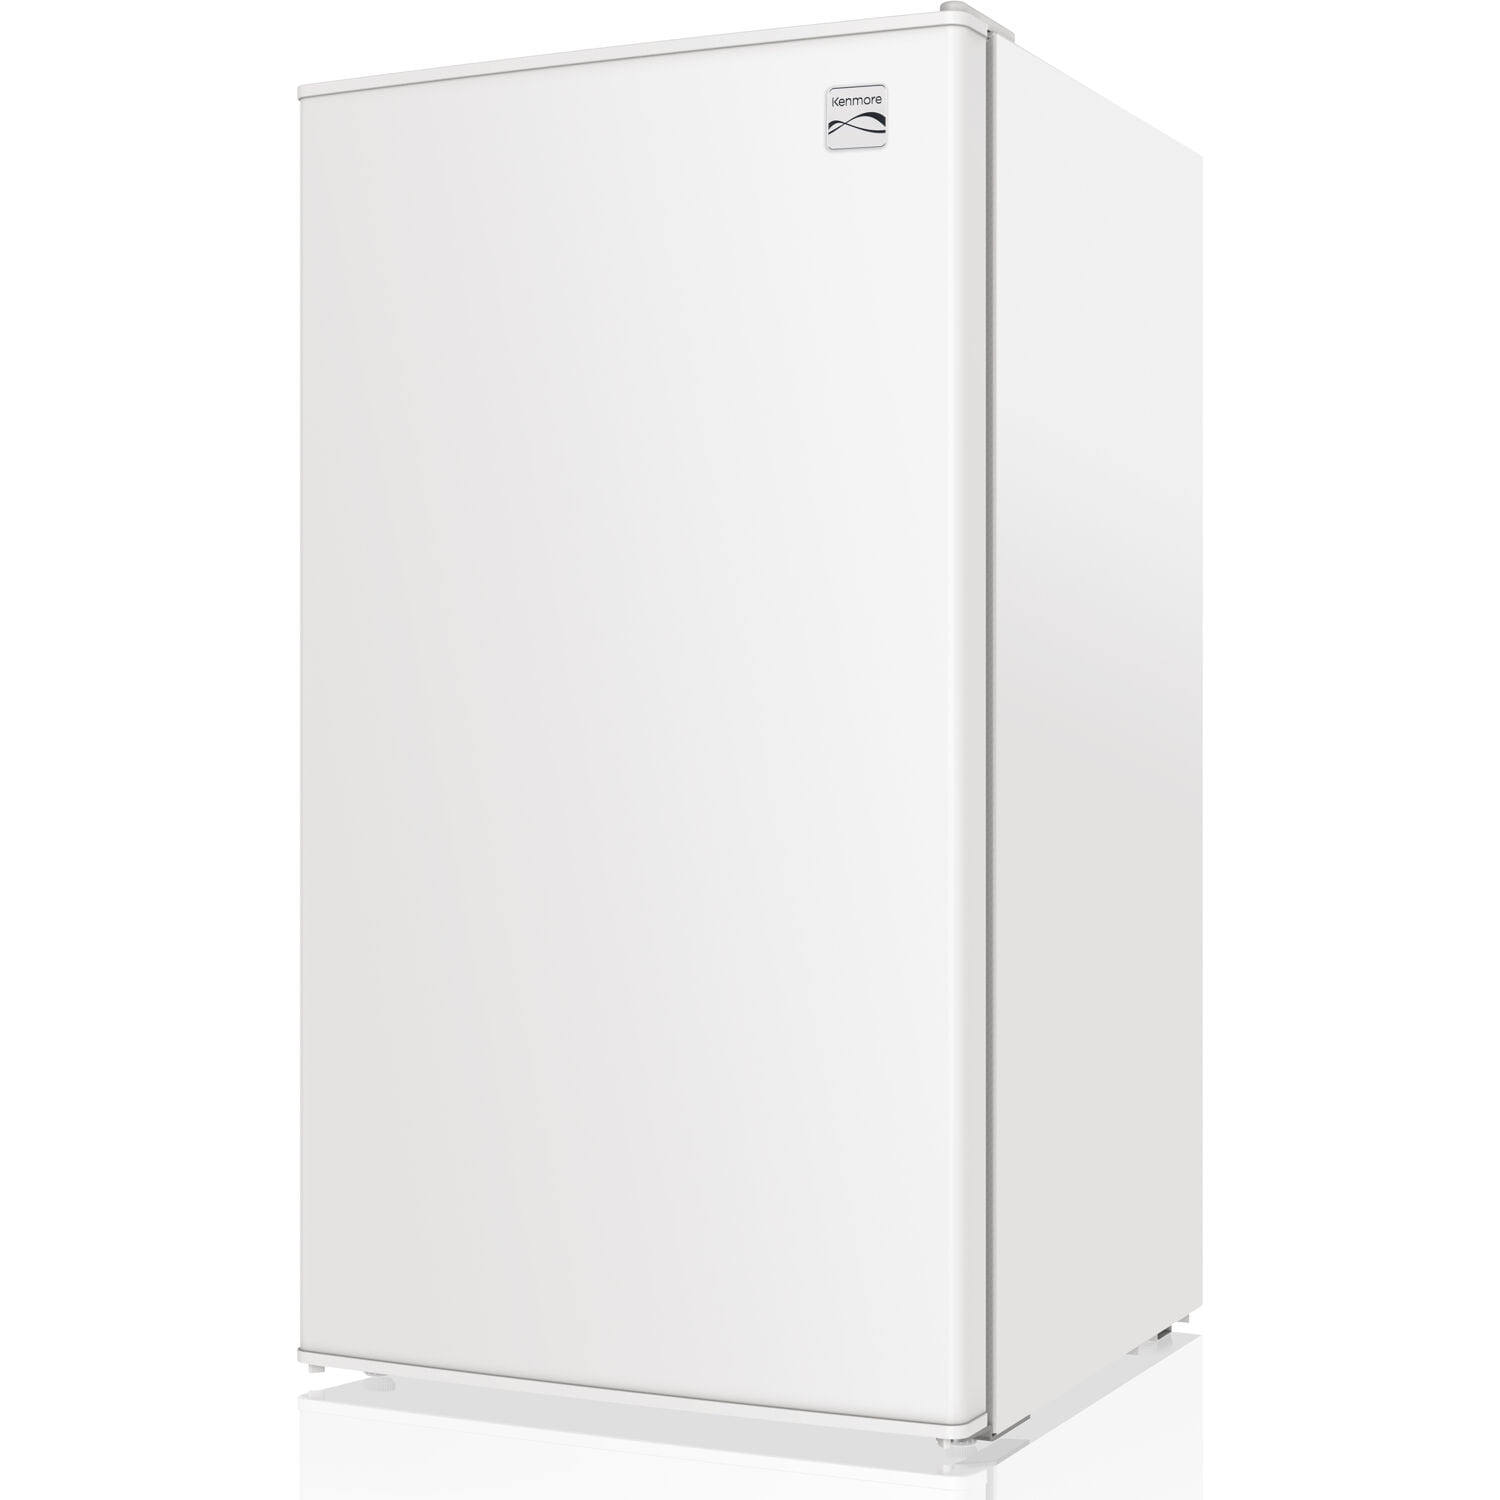 35+ Kenmore 10 cu ft refrigerator ideas in 2021 